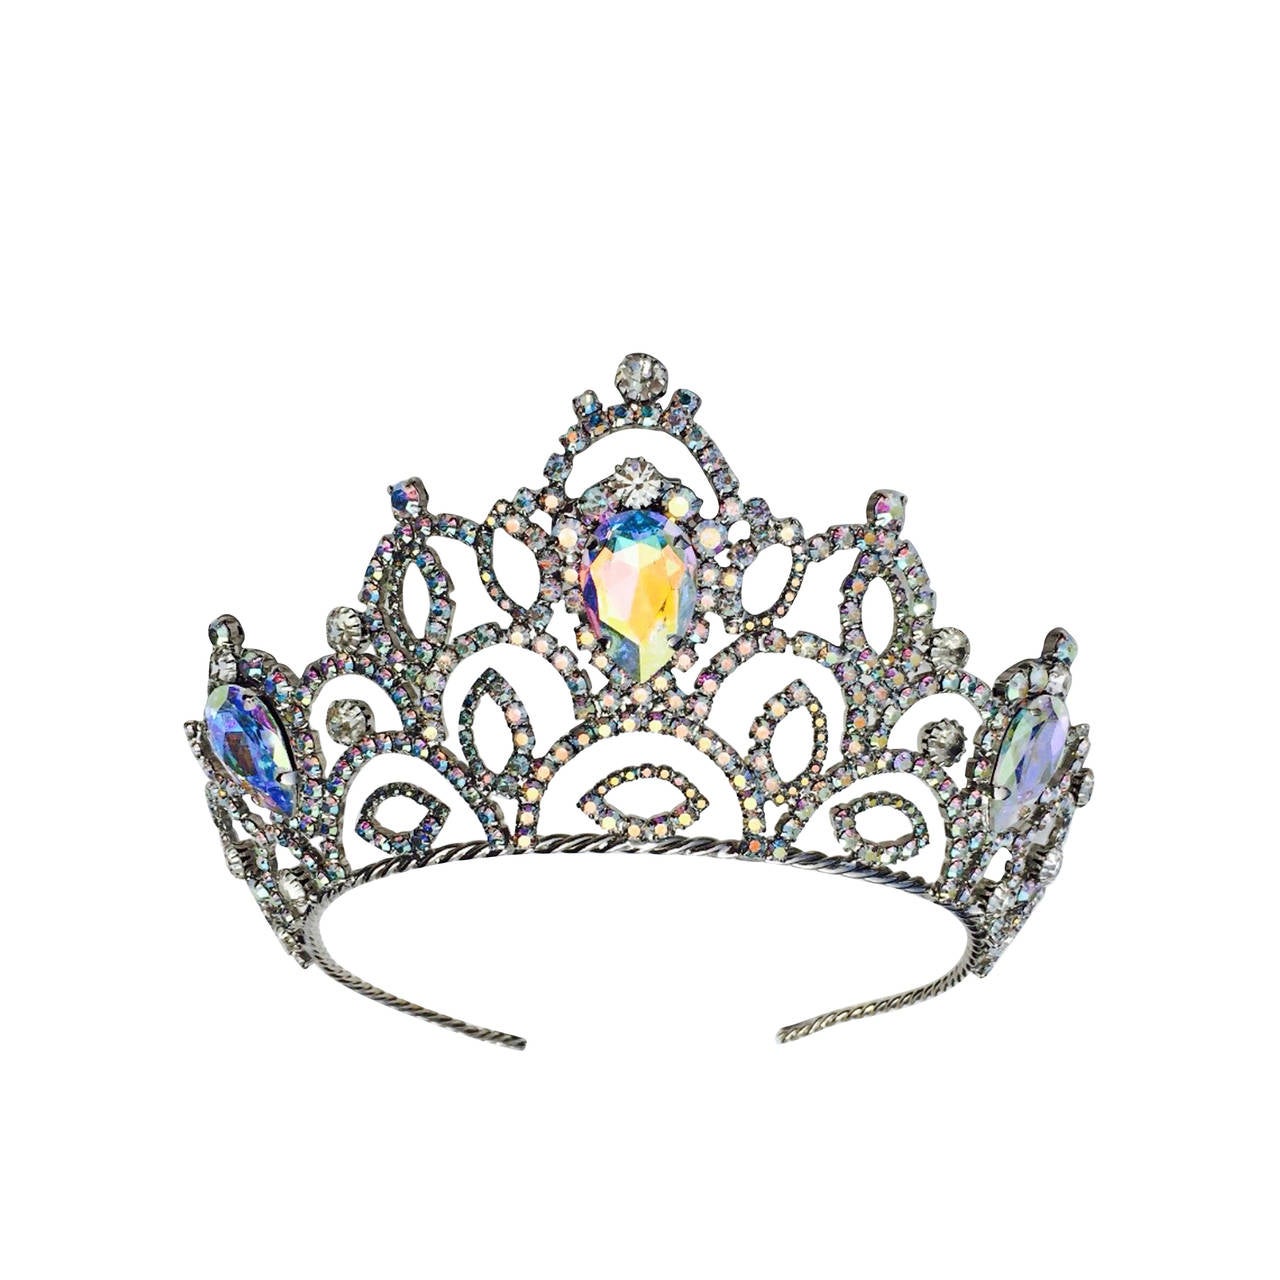 Rare Lawrence Vrba Crystal Tiara Crown For Sale